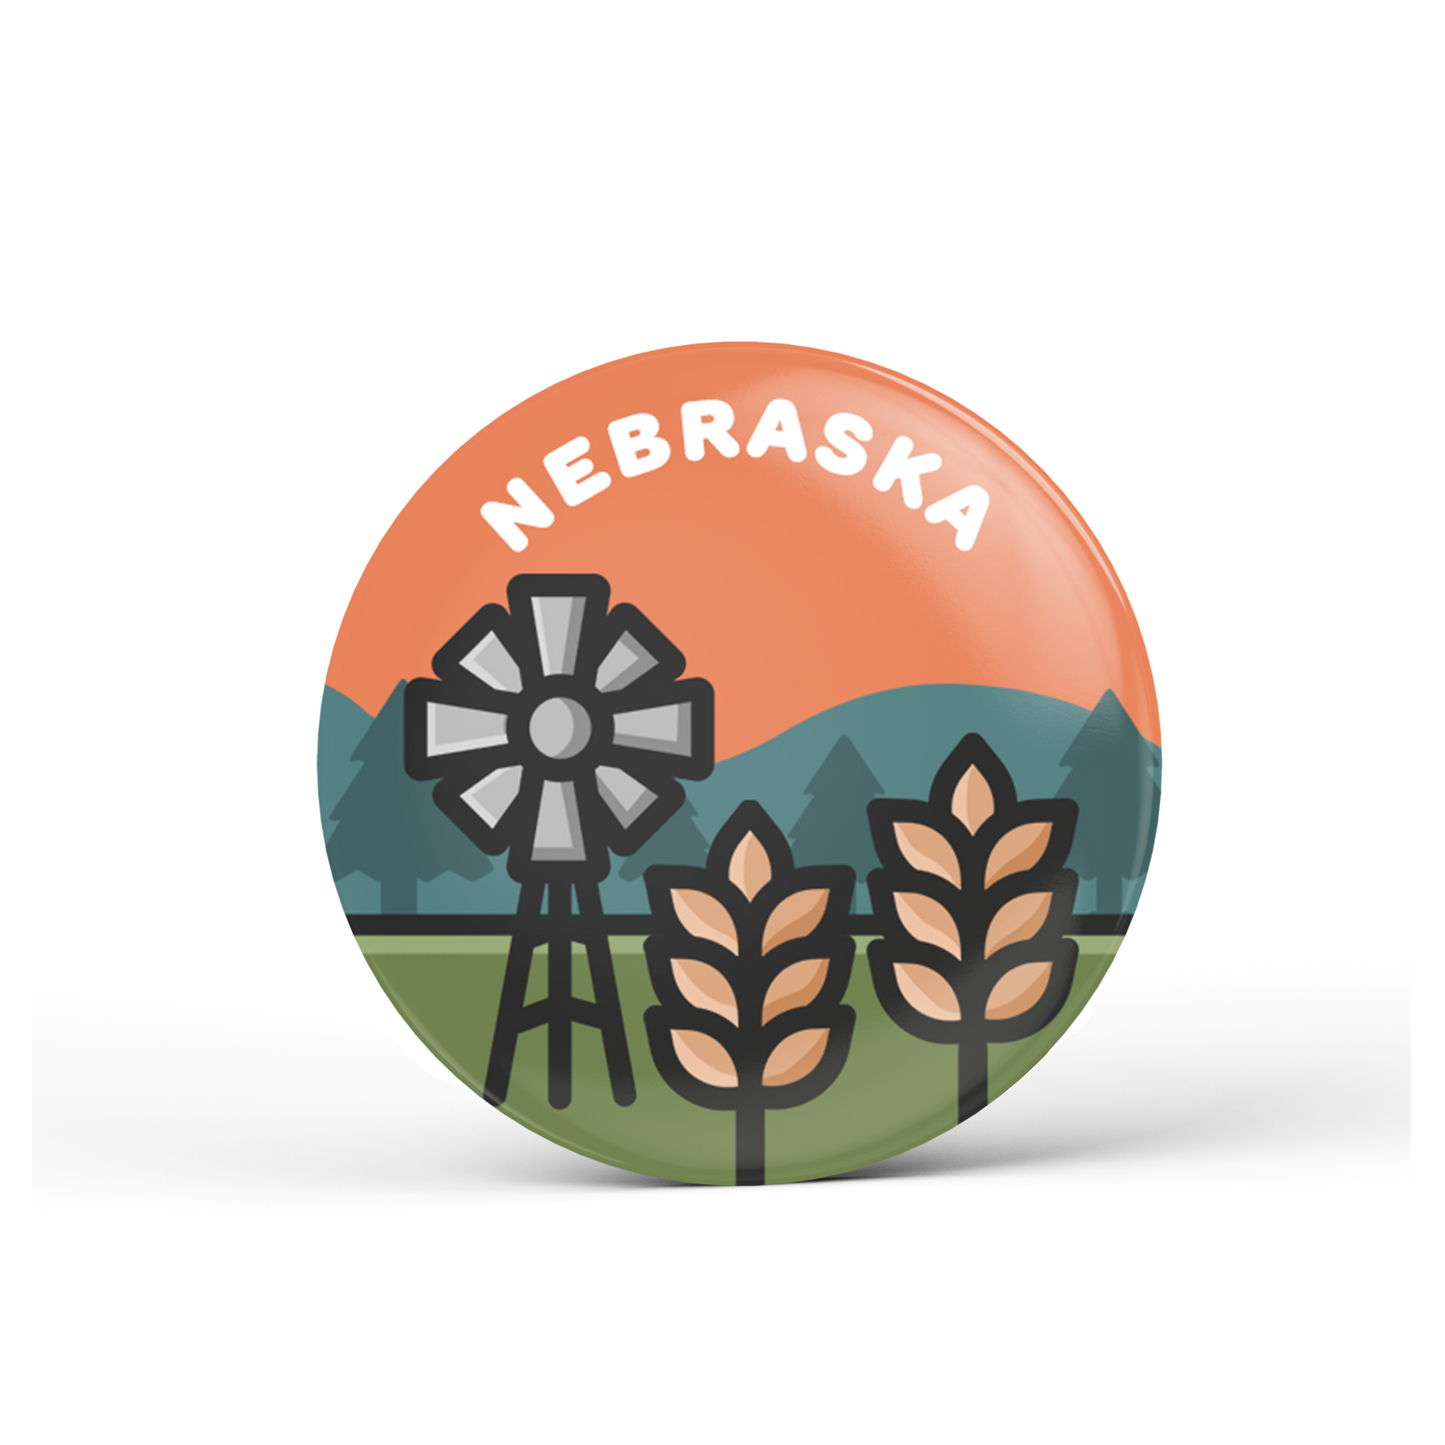 Nebraska Button